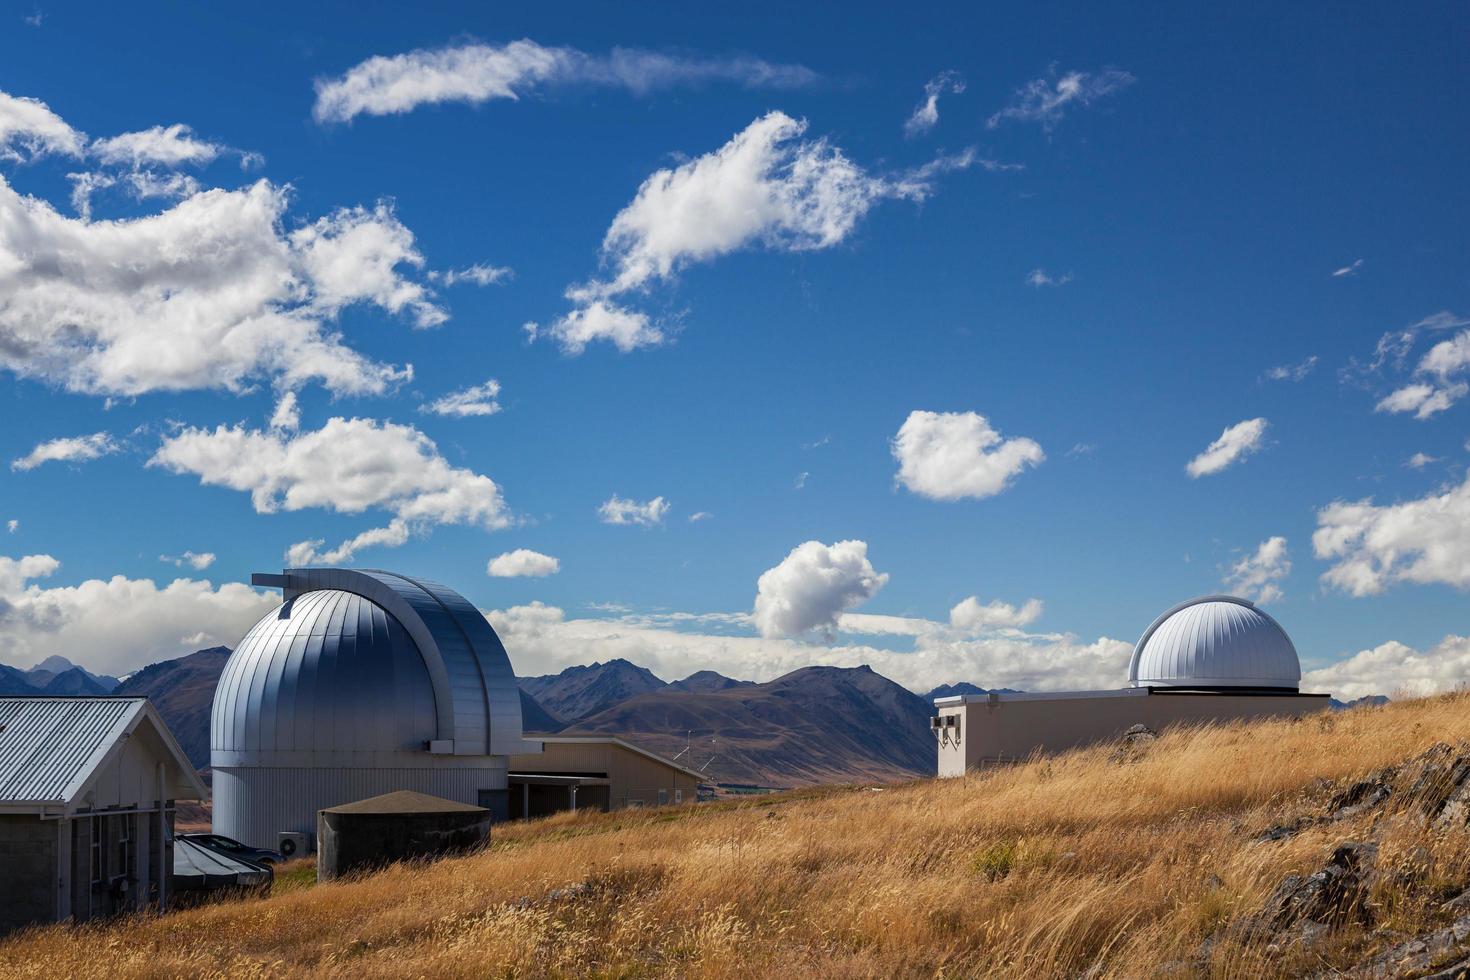 tekapo, nova zelândia, 2012. vista do complexo do observatório mt john foto